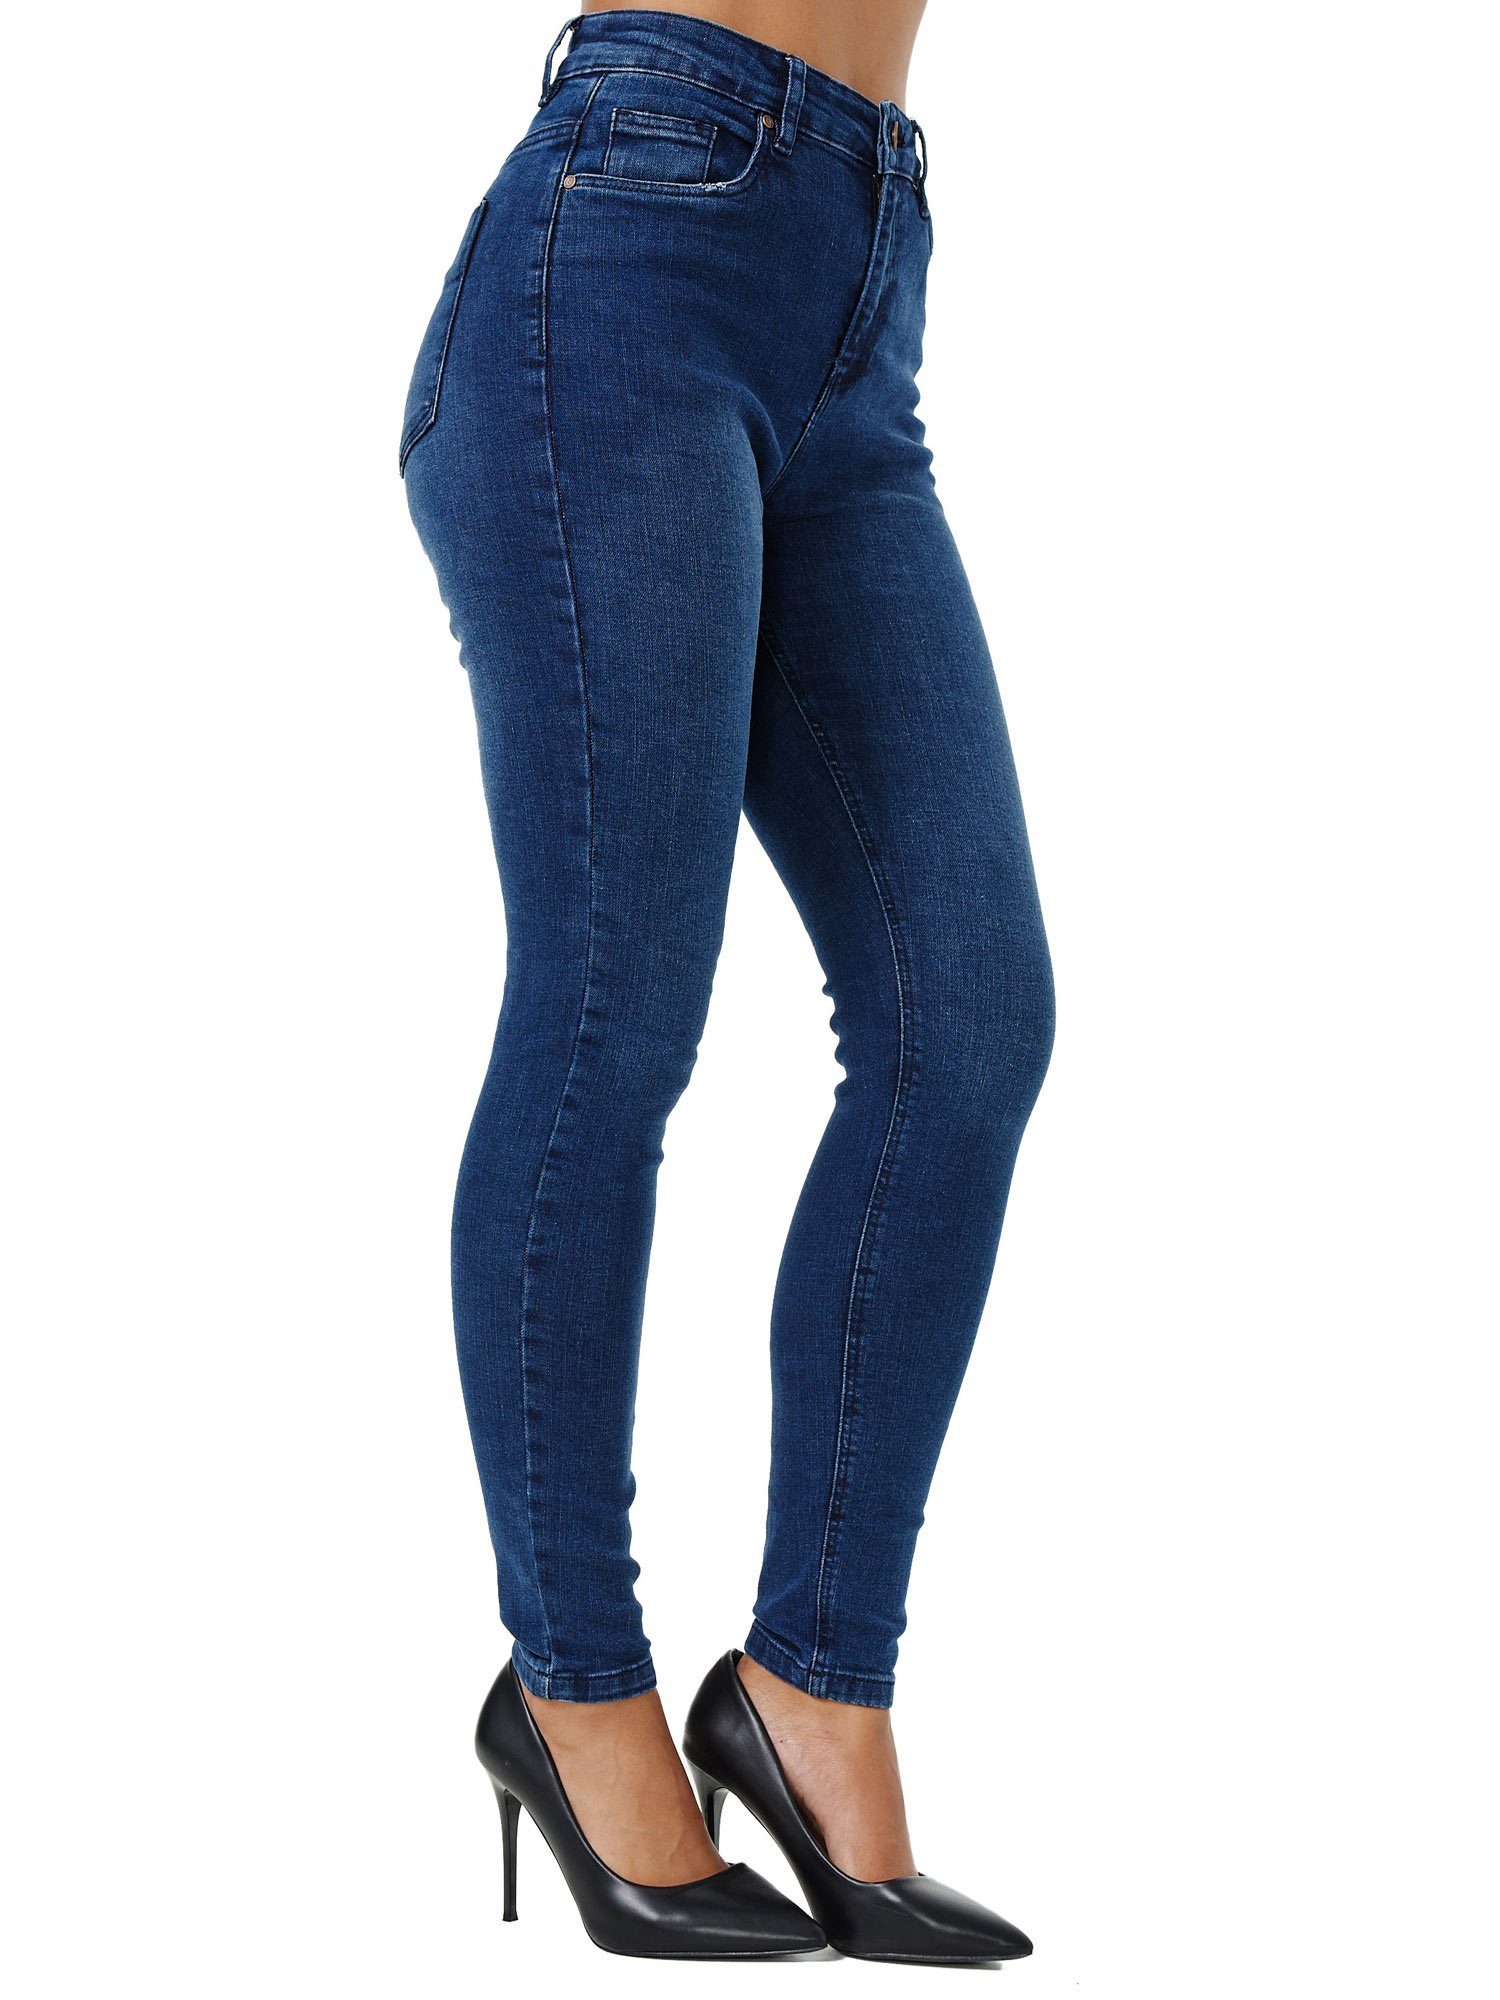 Tazzio Damen dunkelblau Skinny Fit High-waist-Jeans F101 Jeanshose